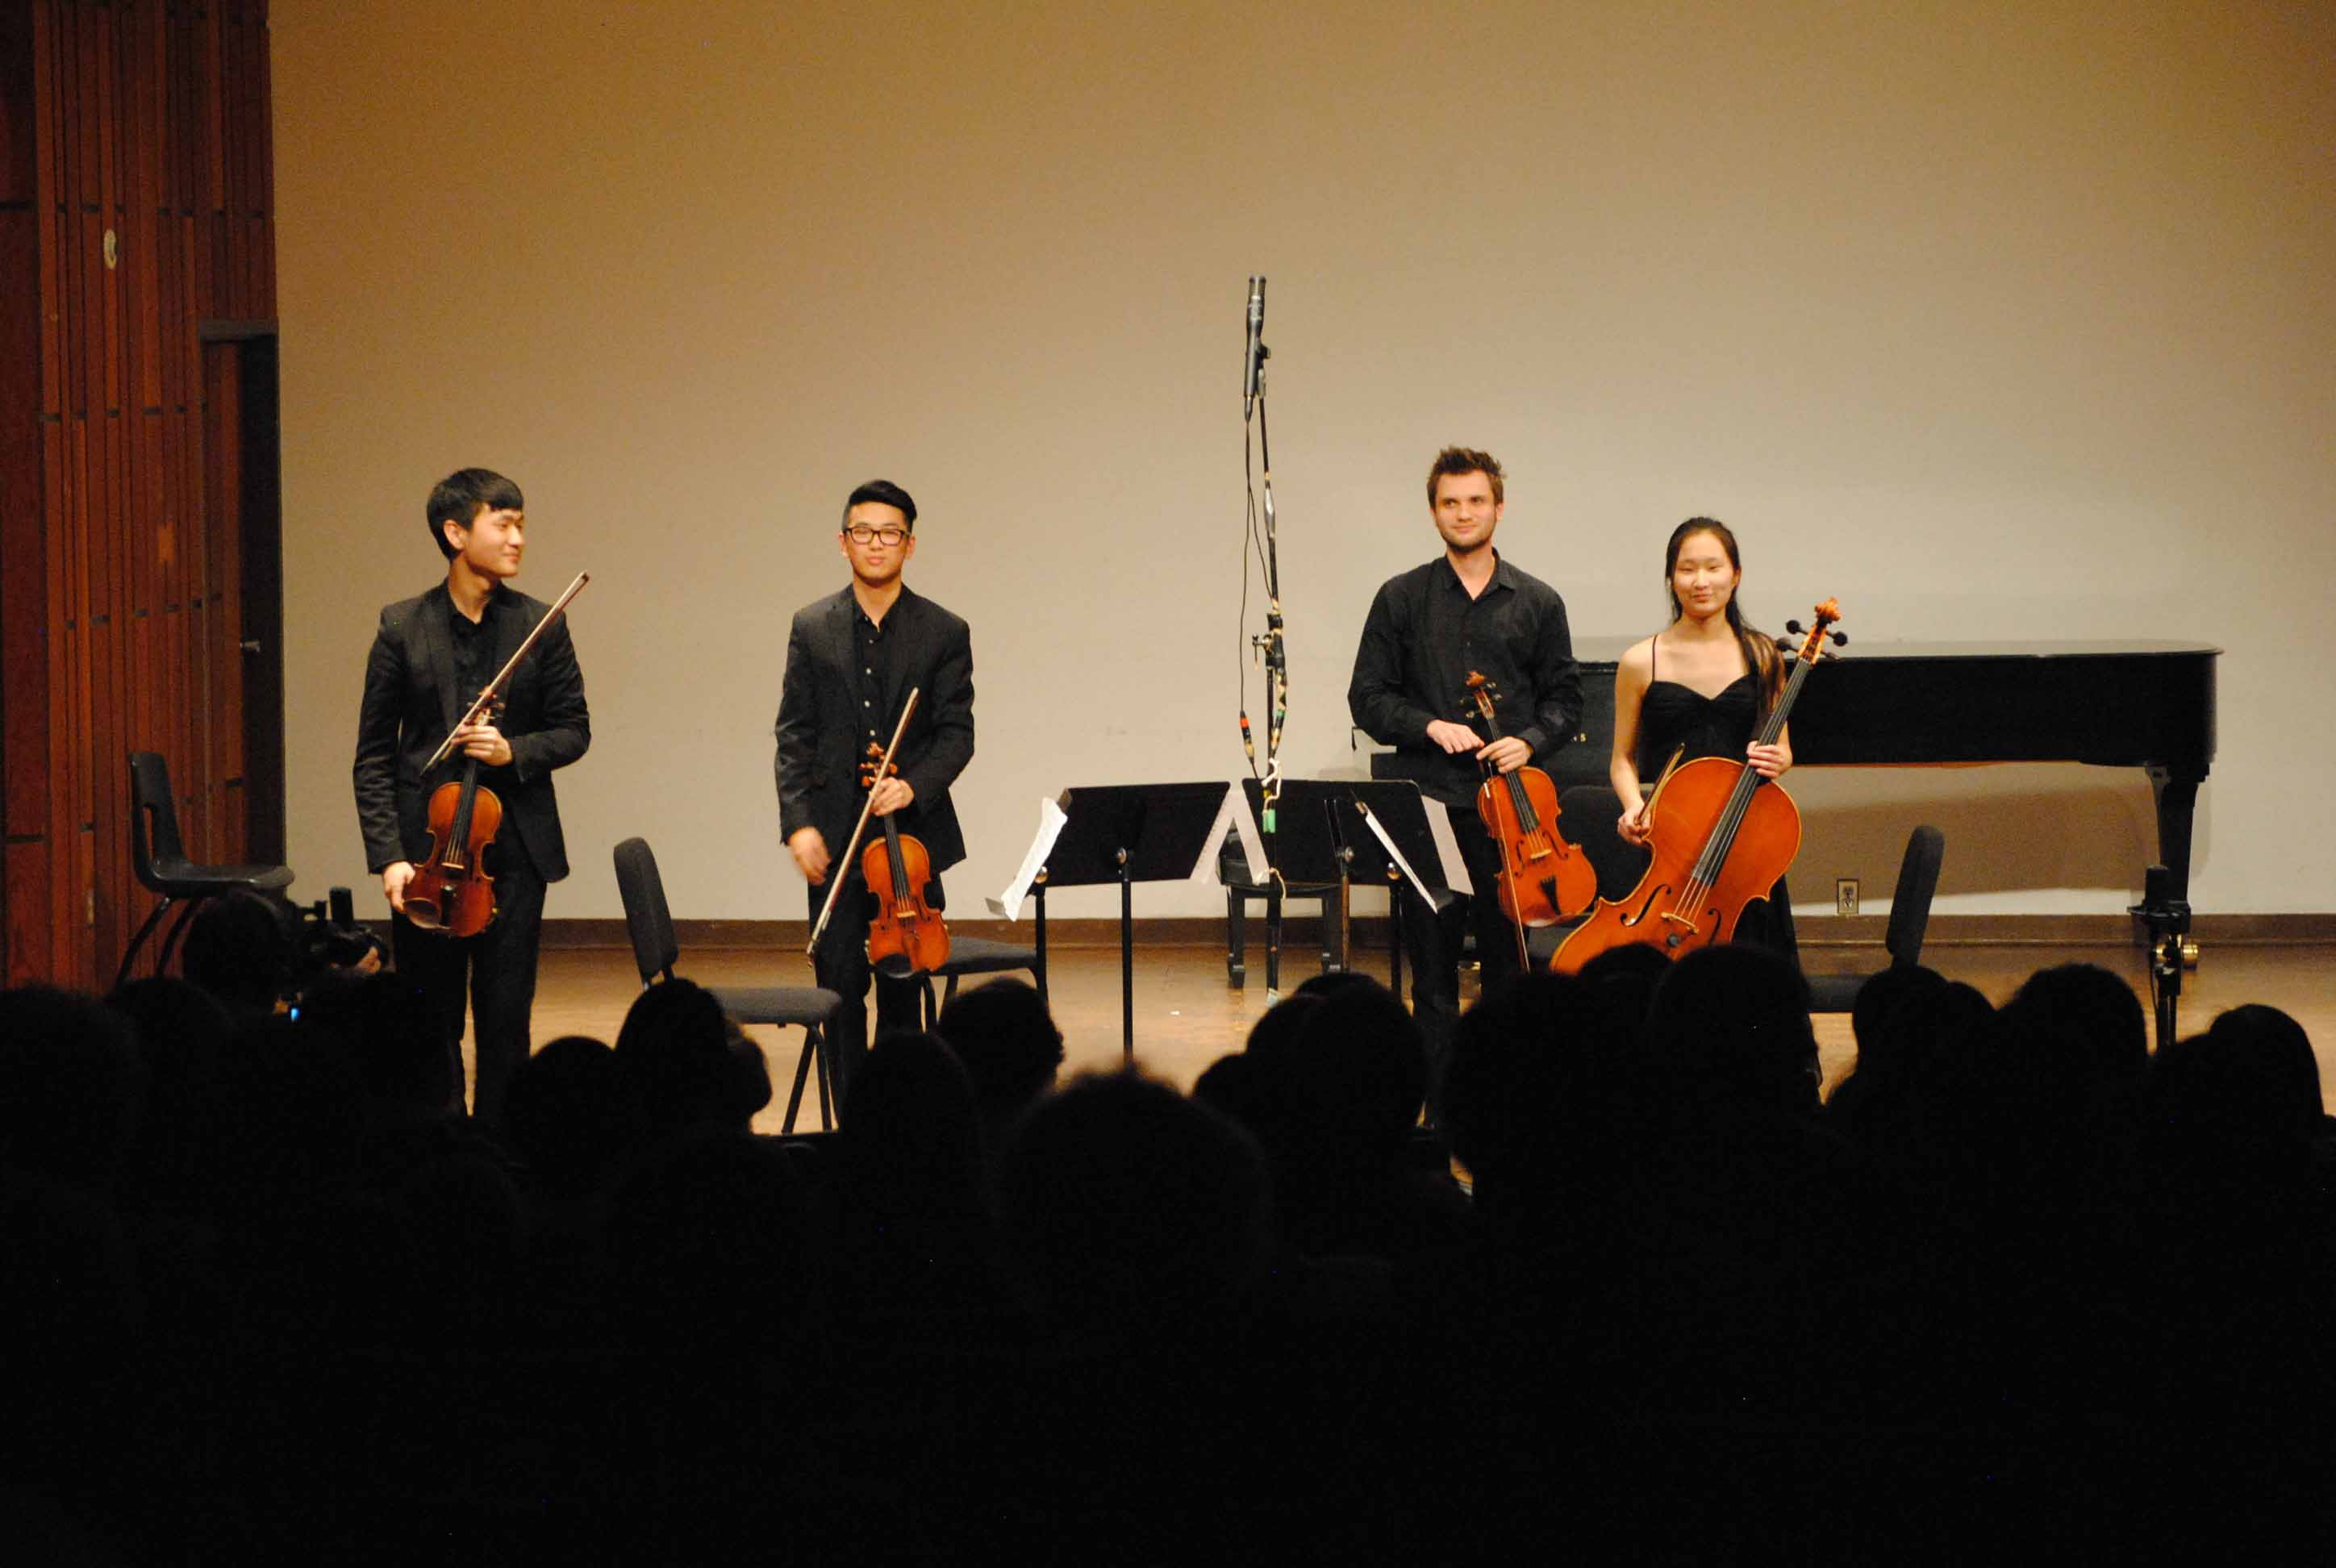 Kurt Chen - violin, David Lee - violin, Lucian Barz - viola, Olivia Cho - cello